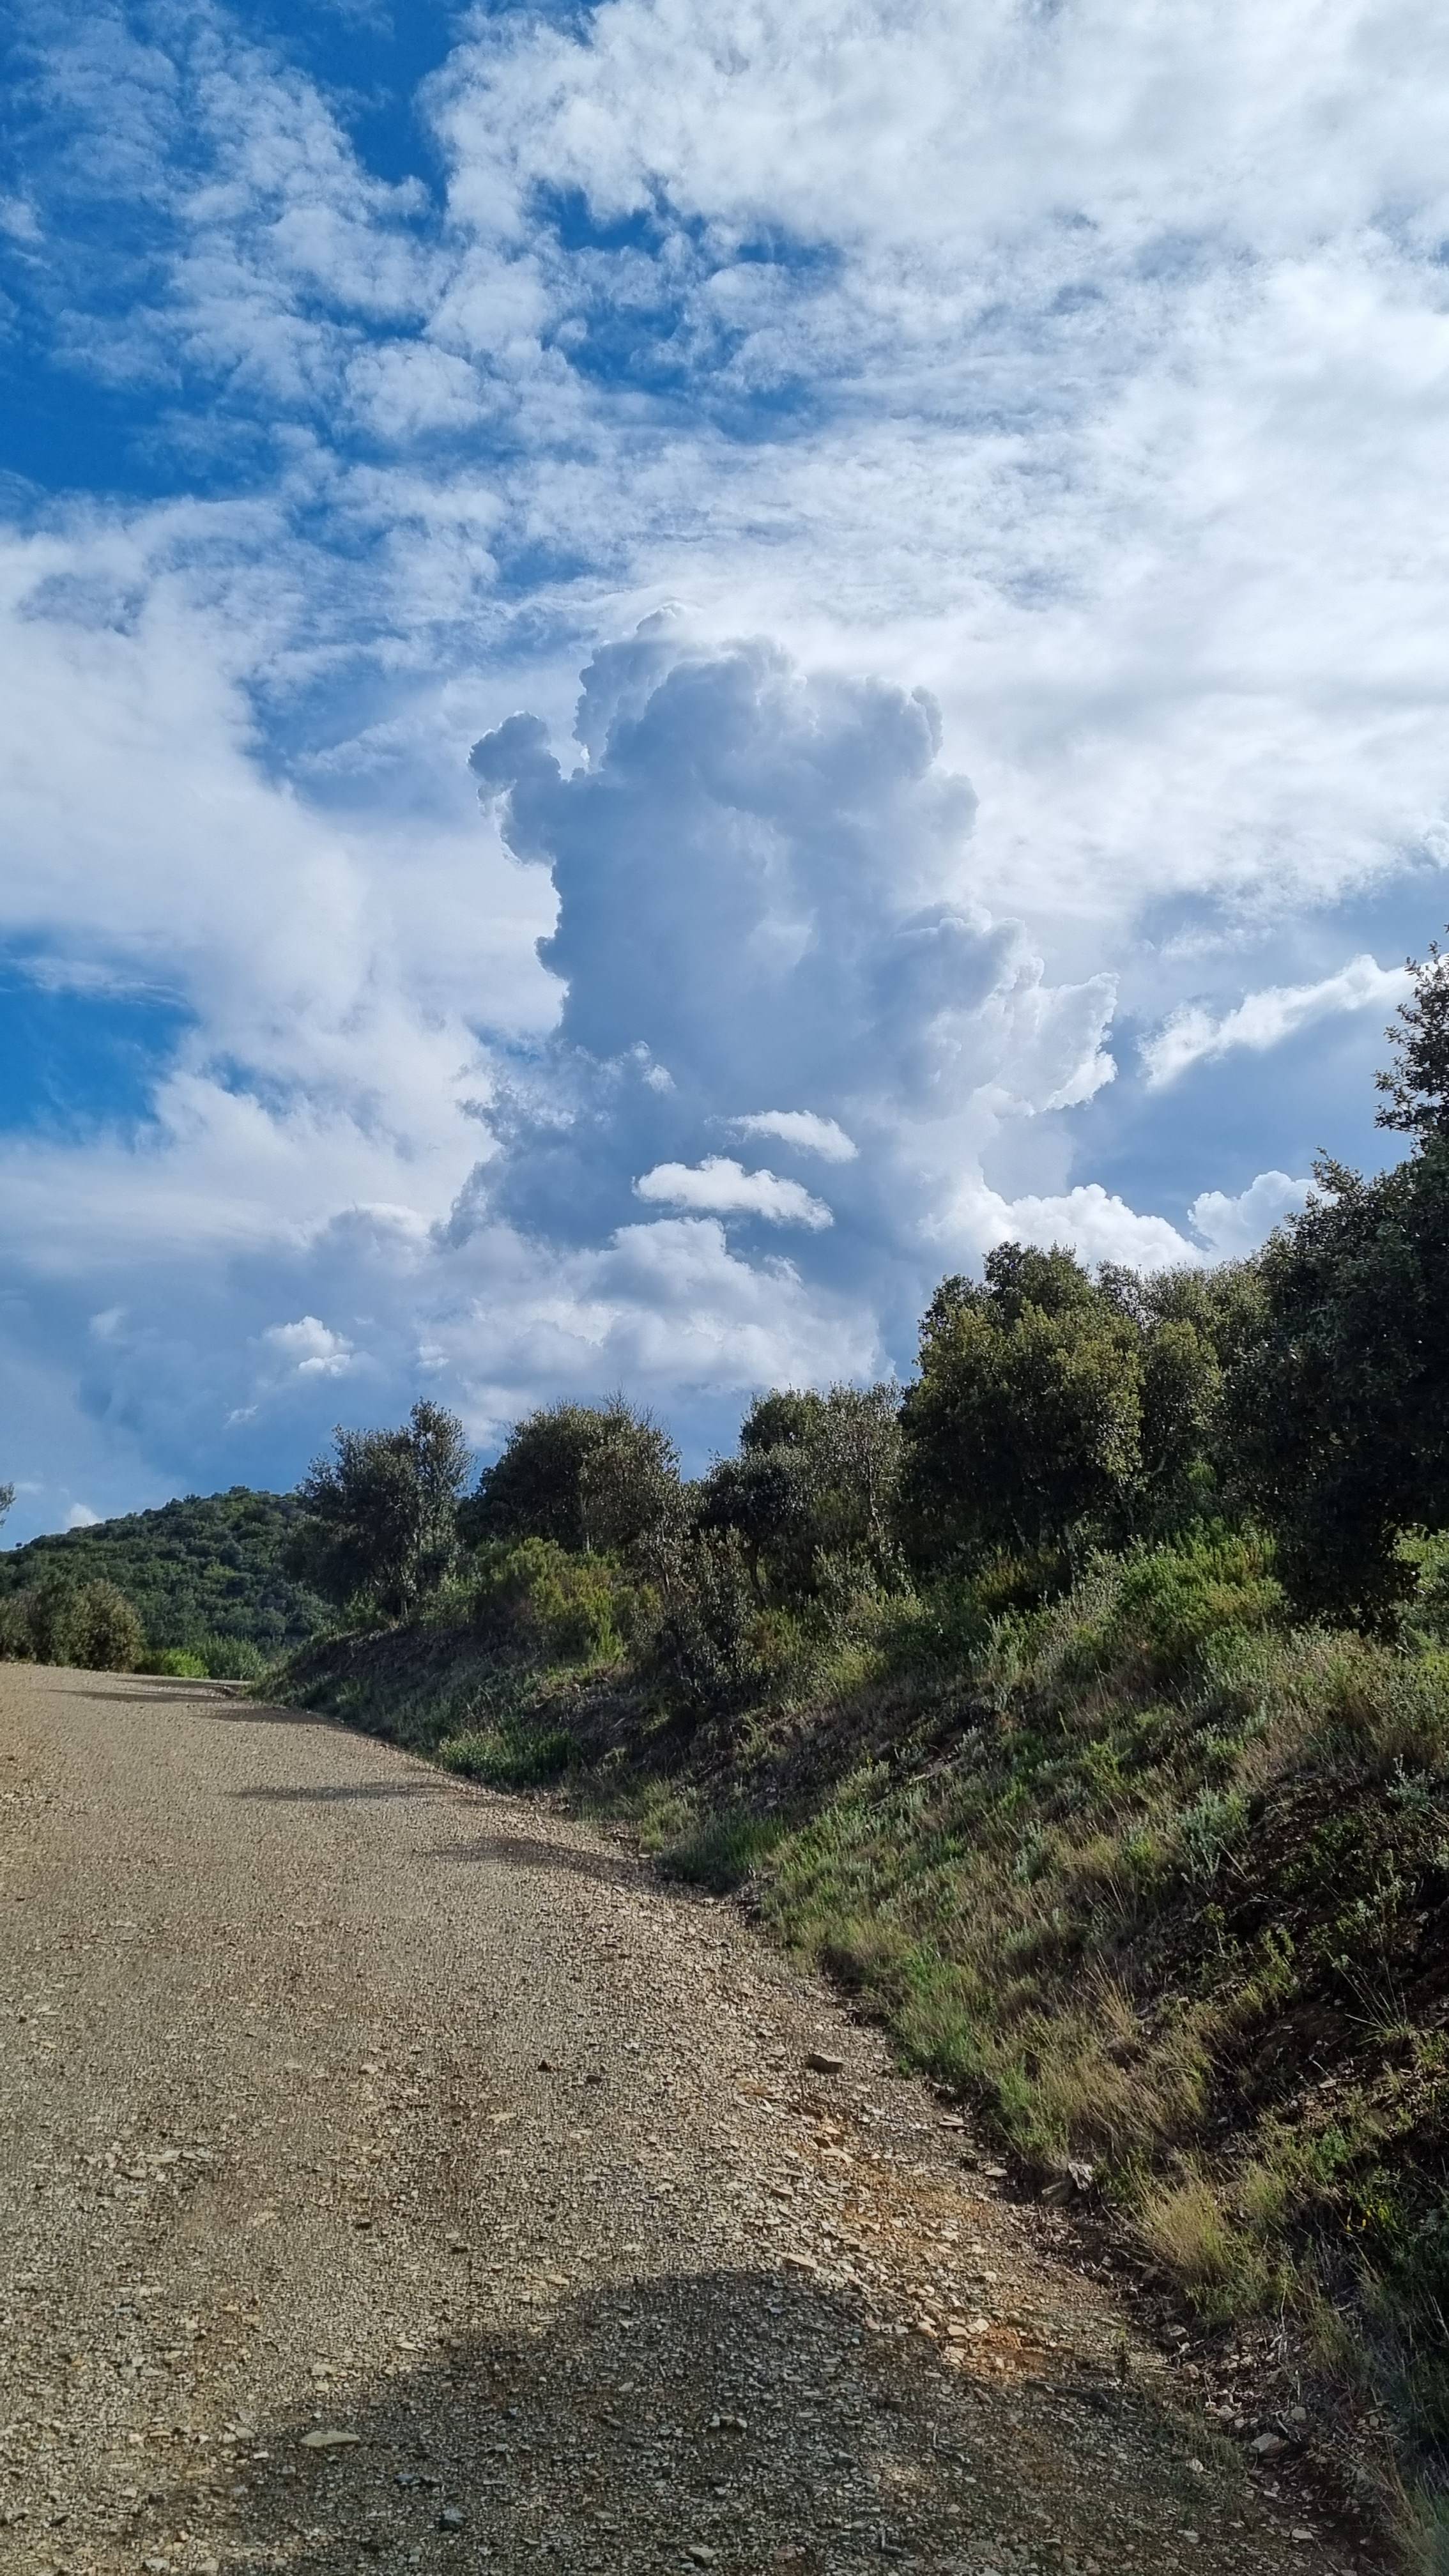 Picture from Area related to Céret - Prades, Puig de Boc, Chemin de Castelnou shoot by Romano Serra